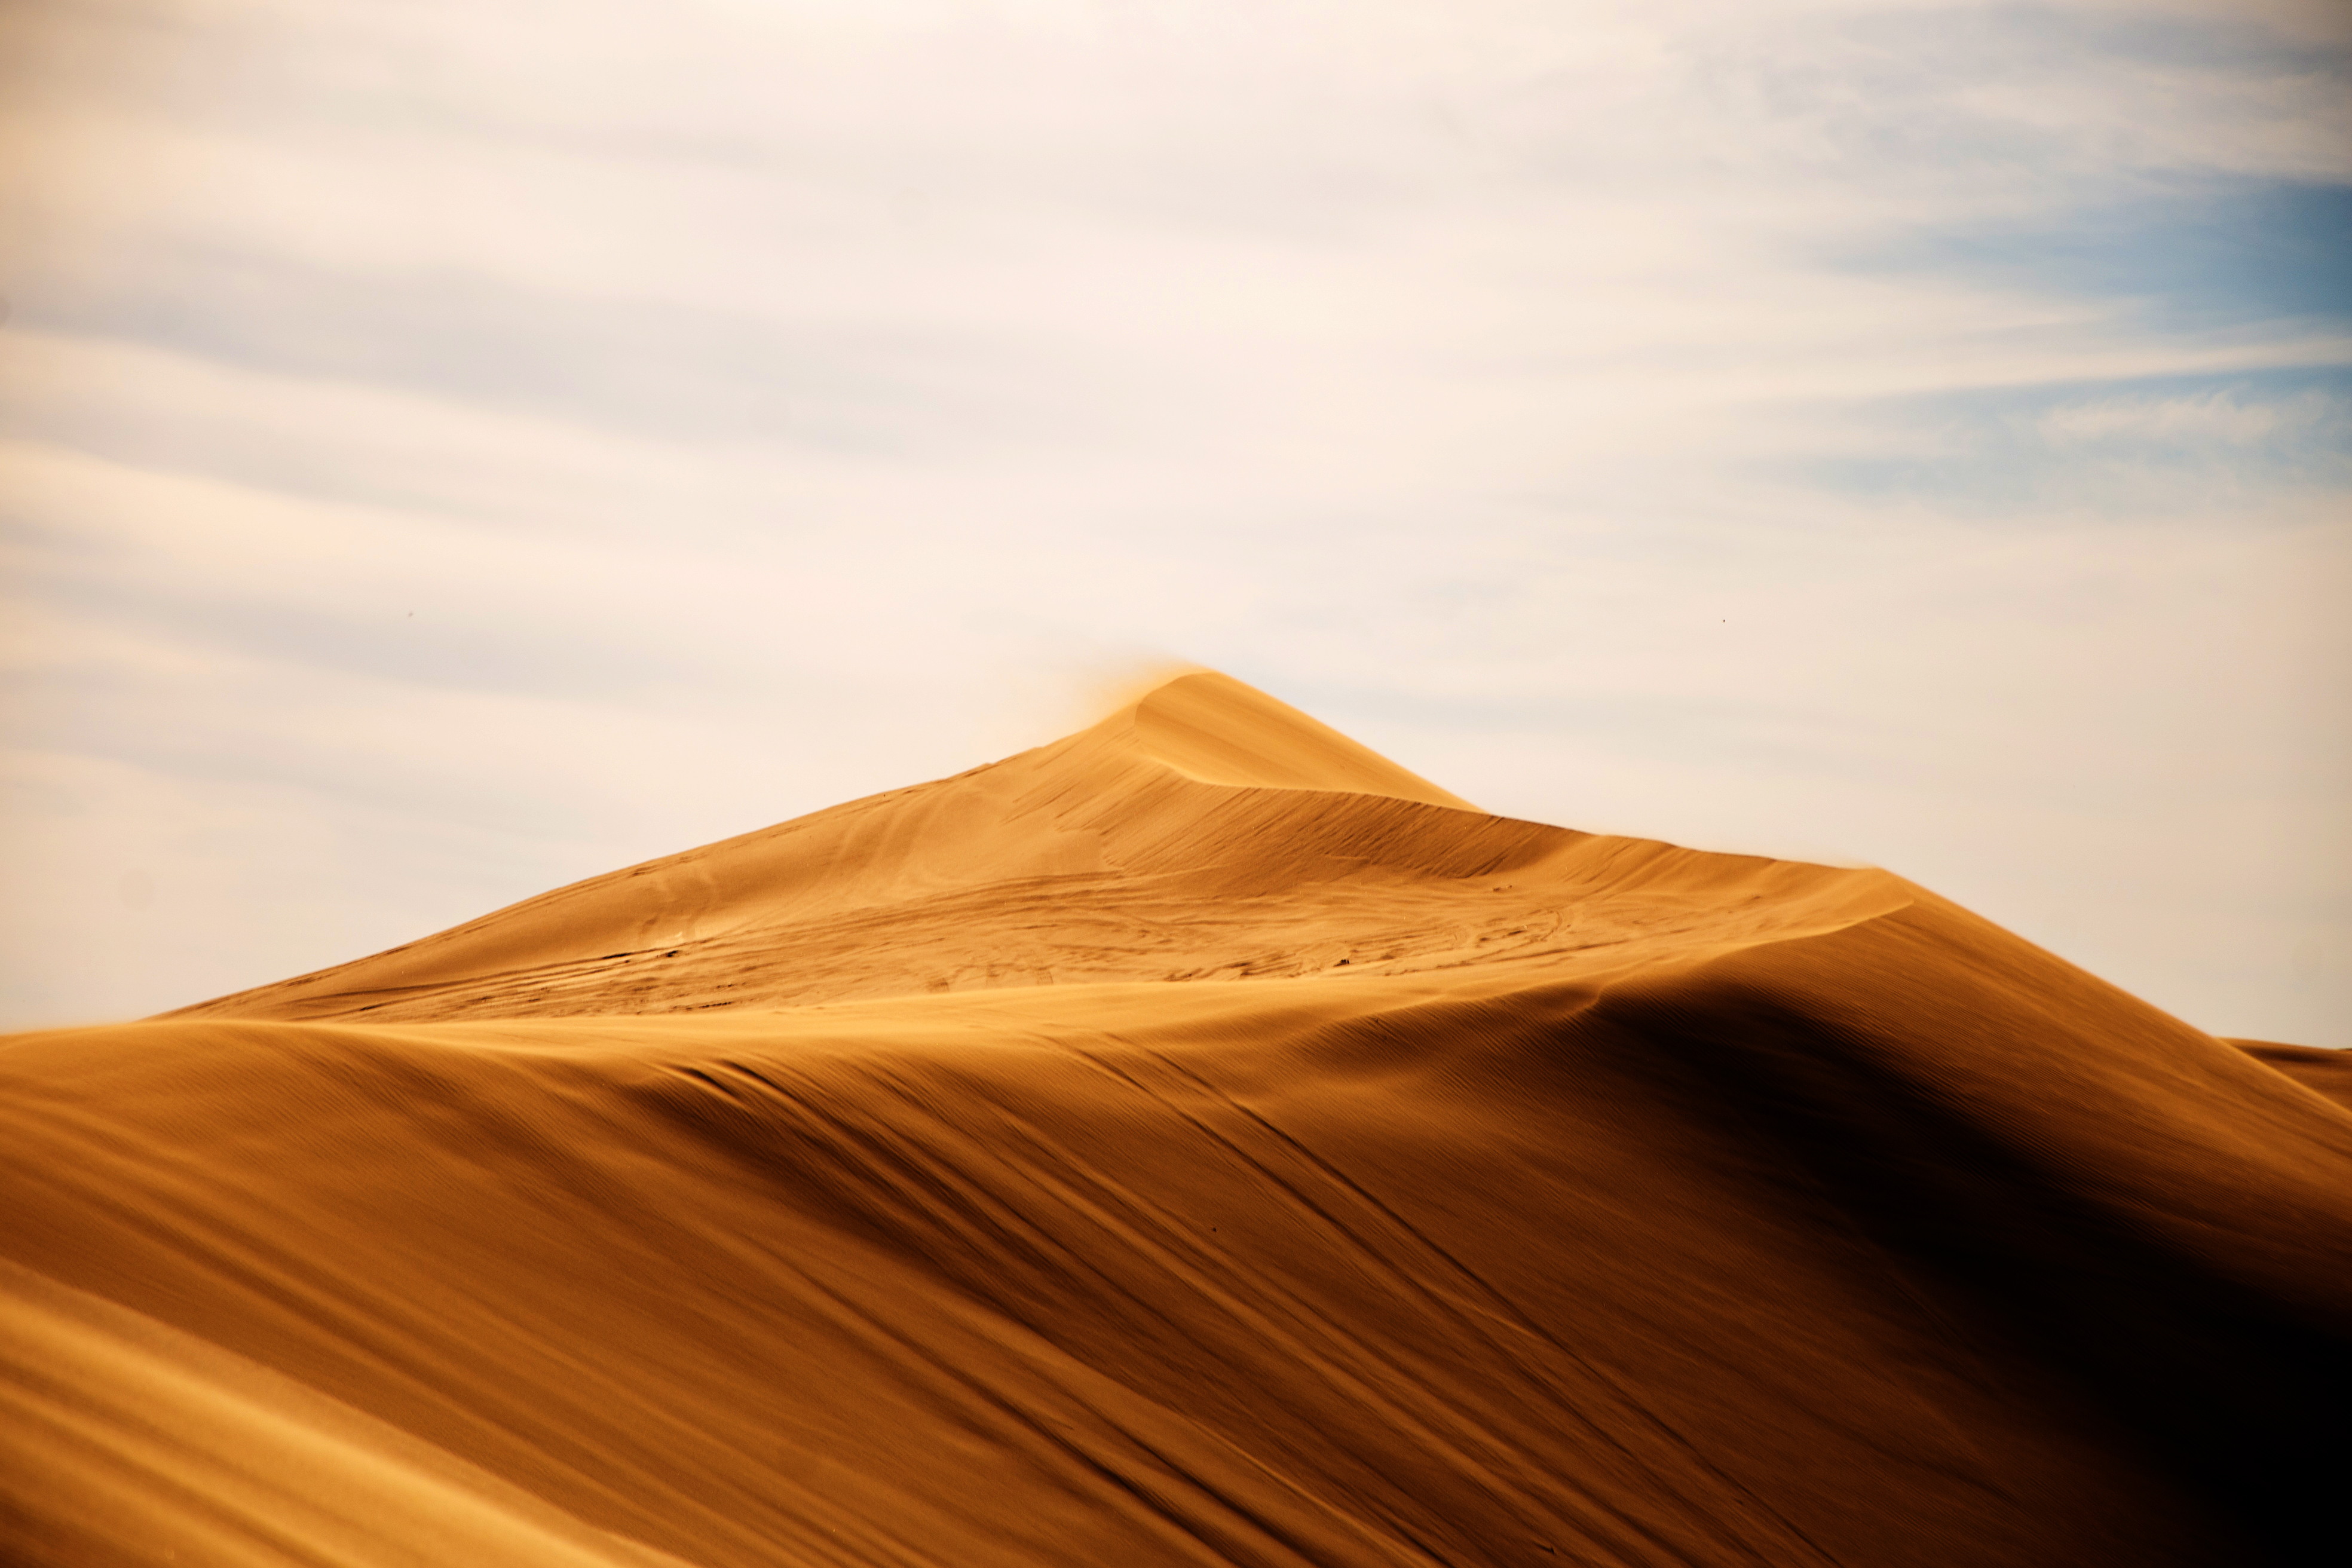 914880 descargar imagen tierra/naturaleza, desierto, áfrica, duna, polvo, sáhara, arena: fondos de pantalla y protectores de pantalla gratis